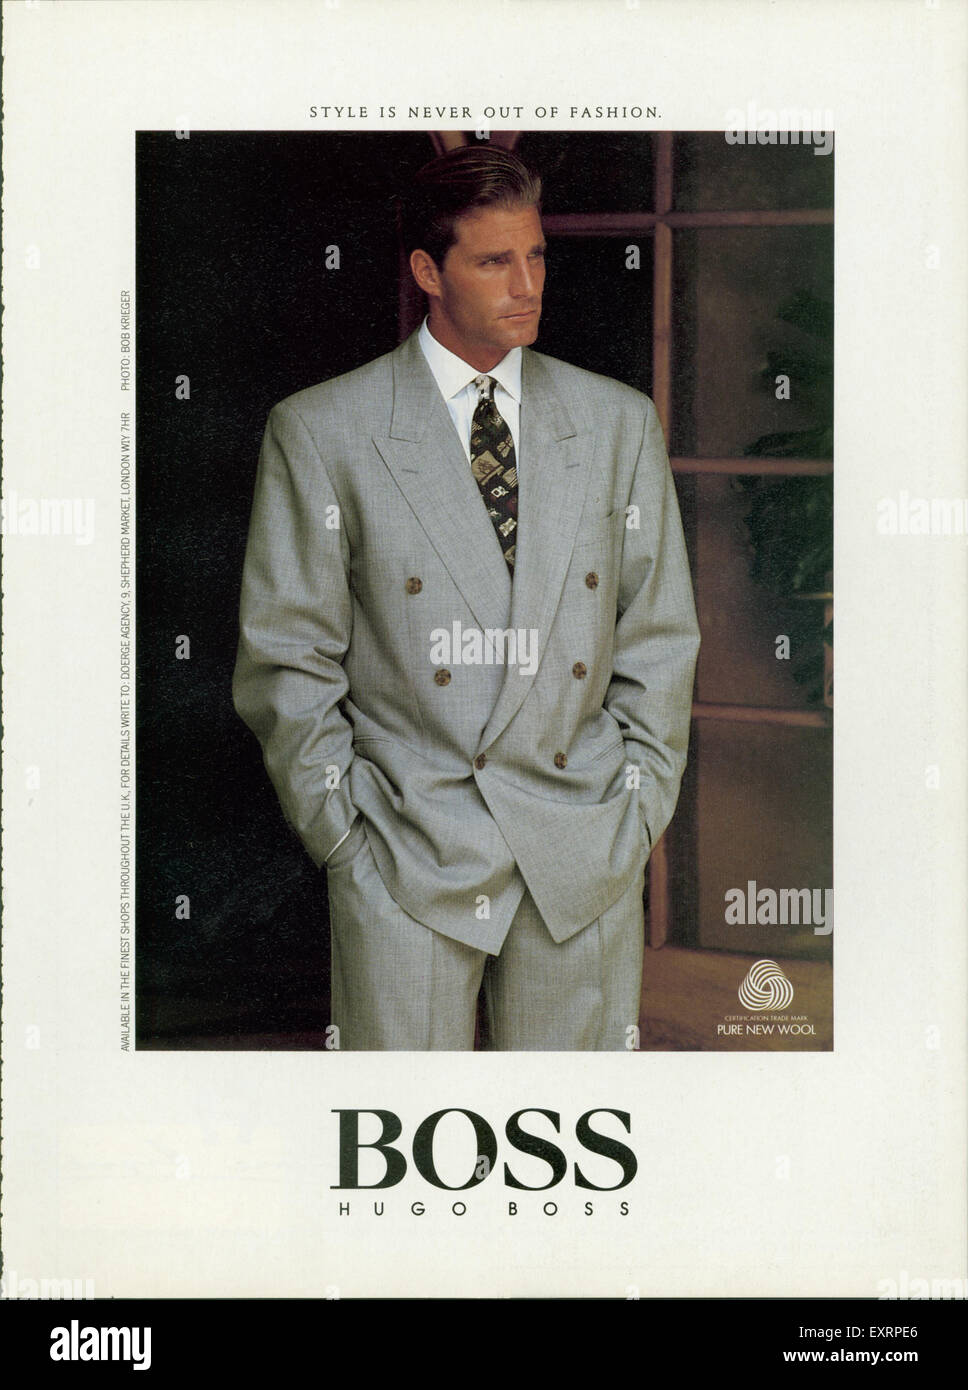 UK Boss Hugo Boss Magazine Advert Stock Photo - Alamy